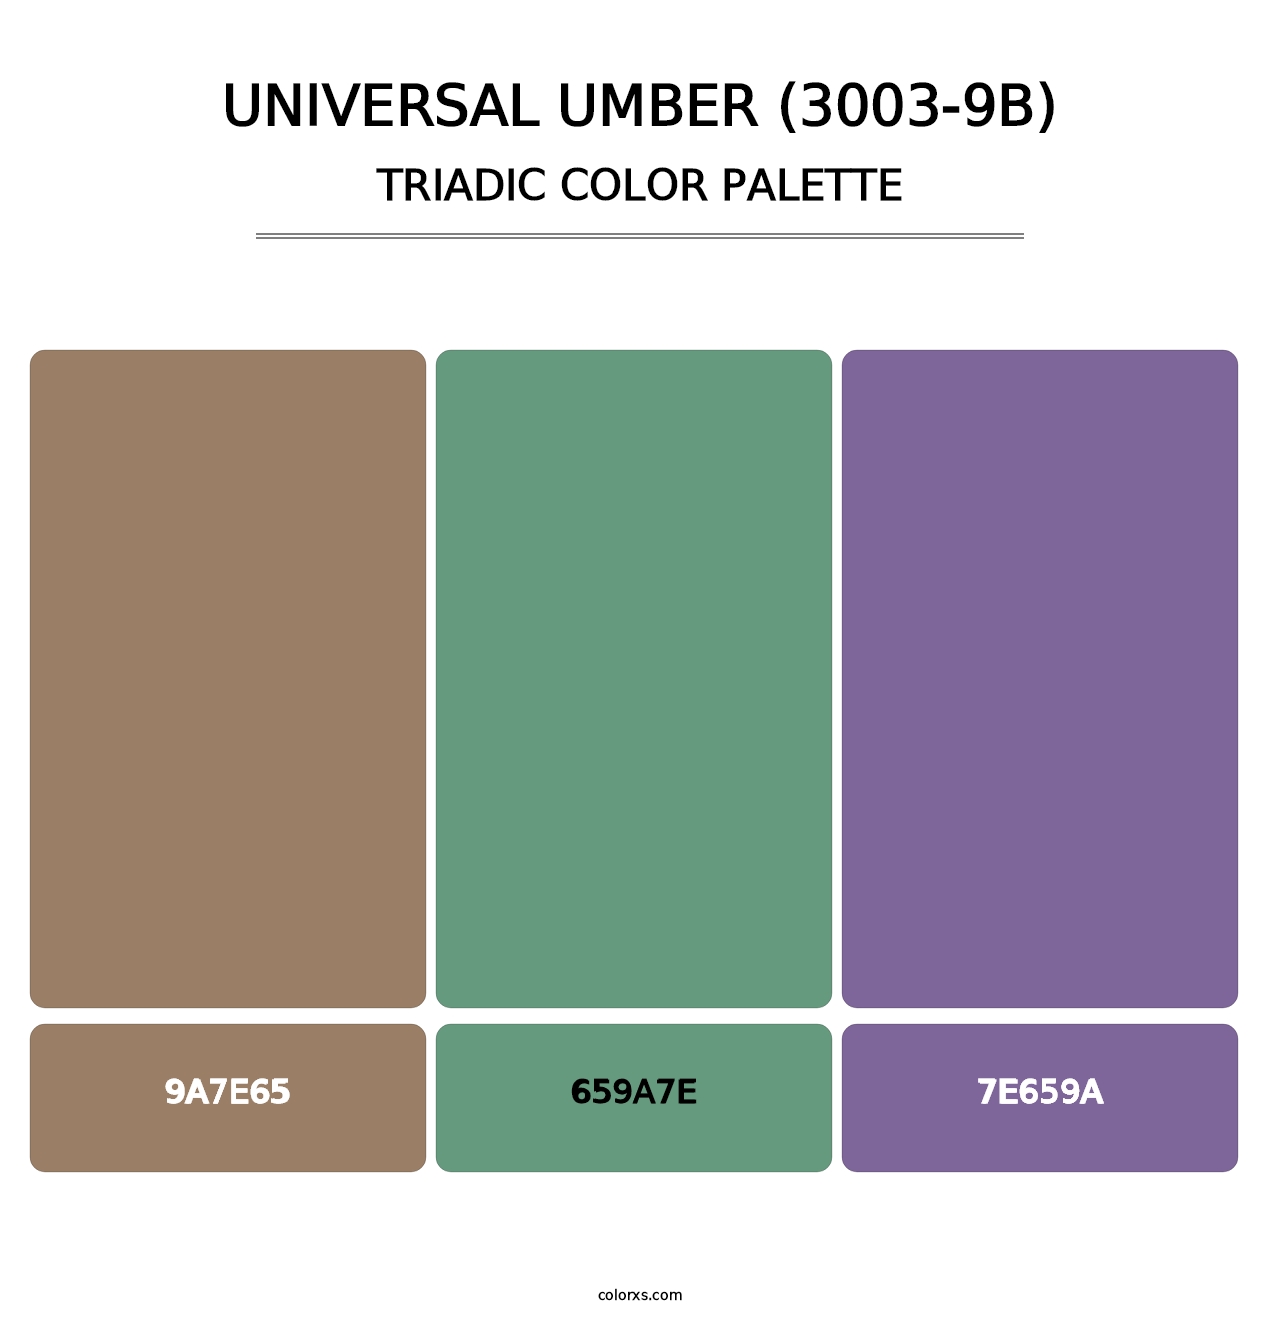 Universal Umber (3003-9B) - Triadic Color Palette